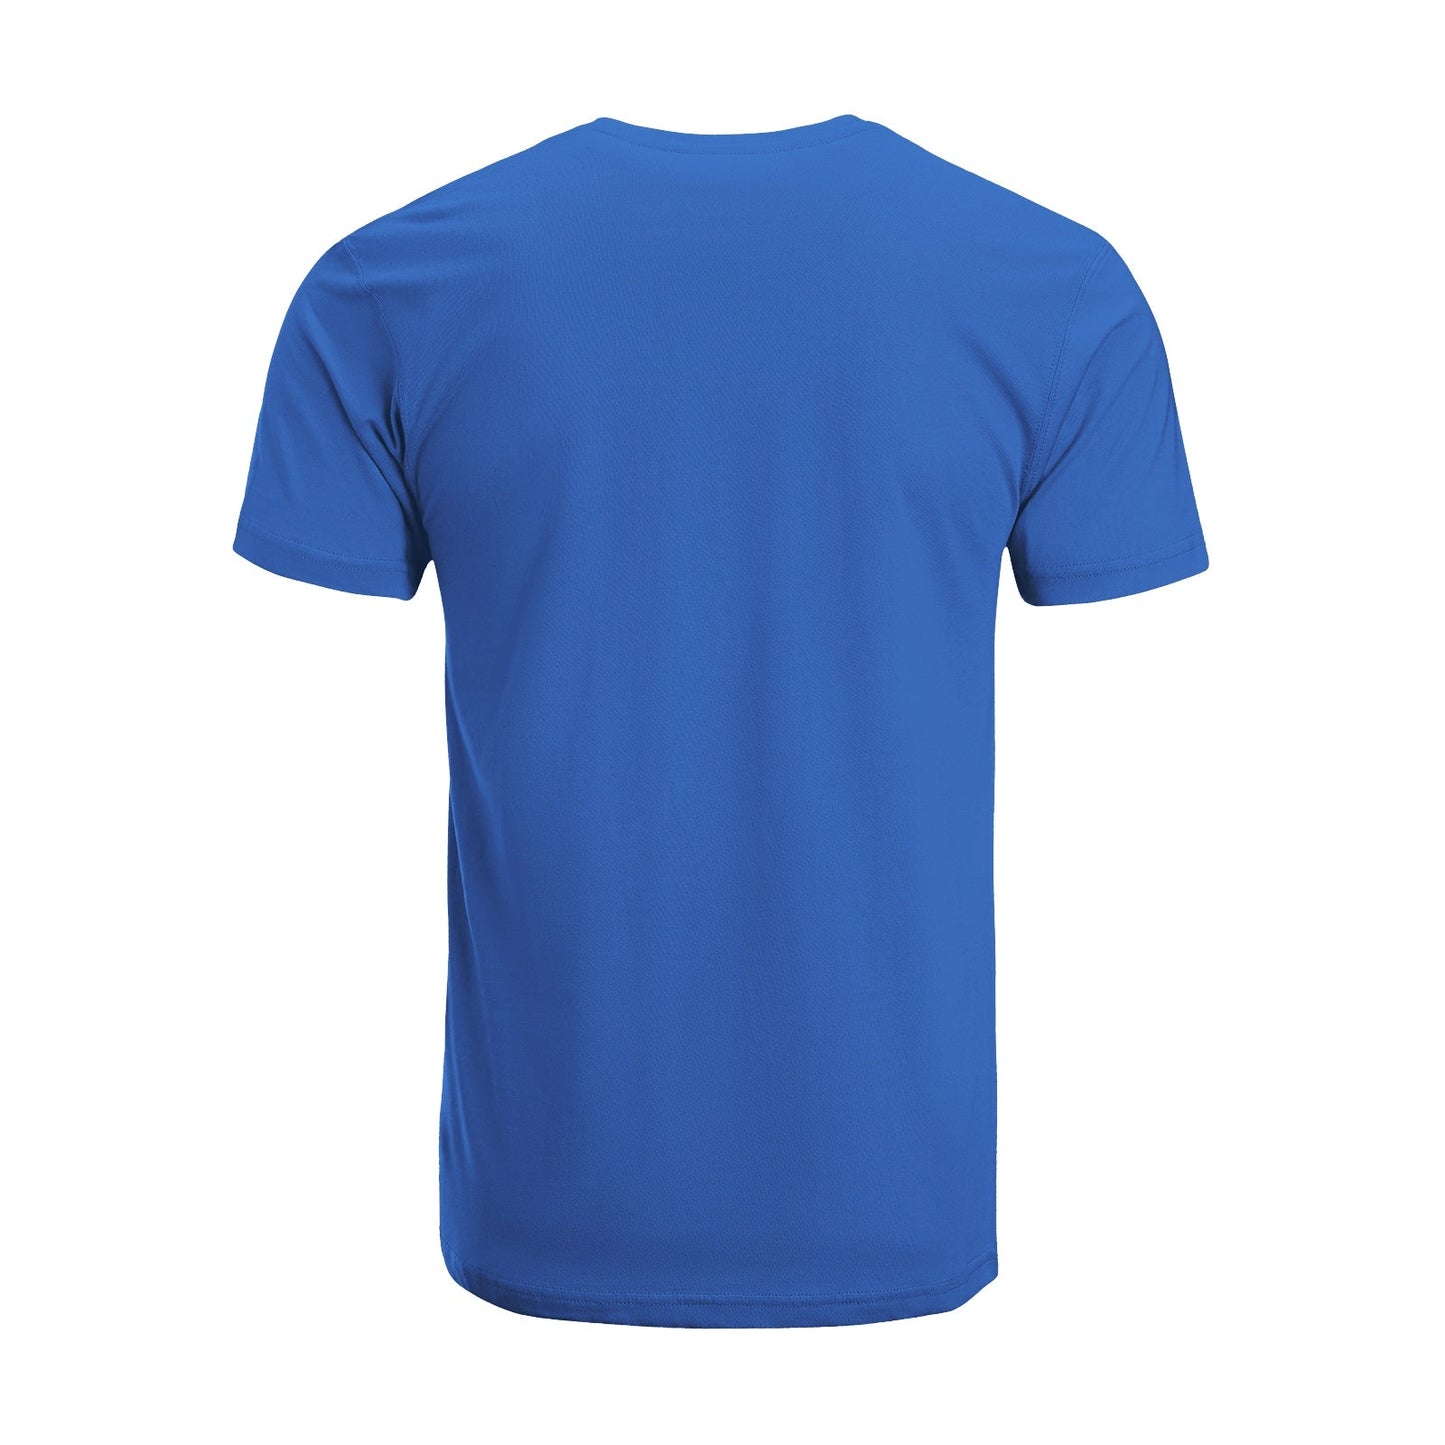 Unisex Short Sleeve Crew Neck Cotton Jersey T-Shirt CAT 36 - Tara-Outfits.com